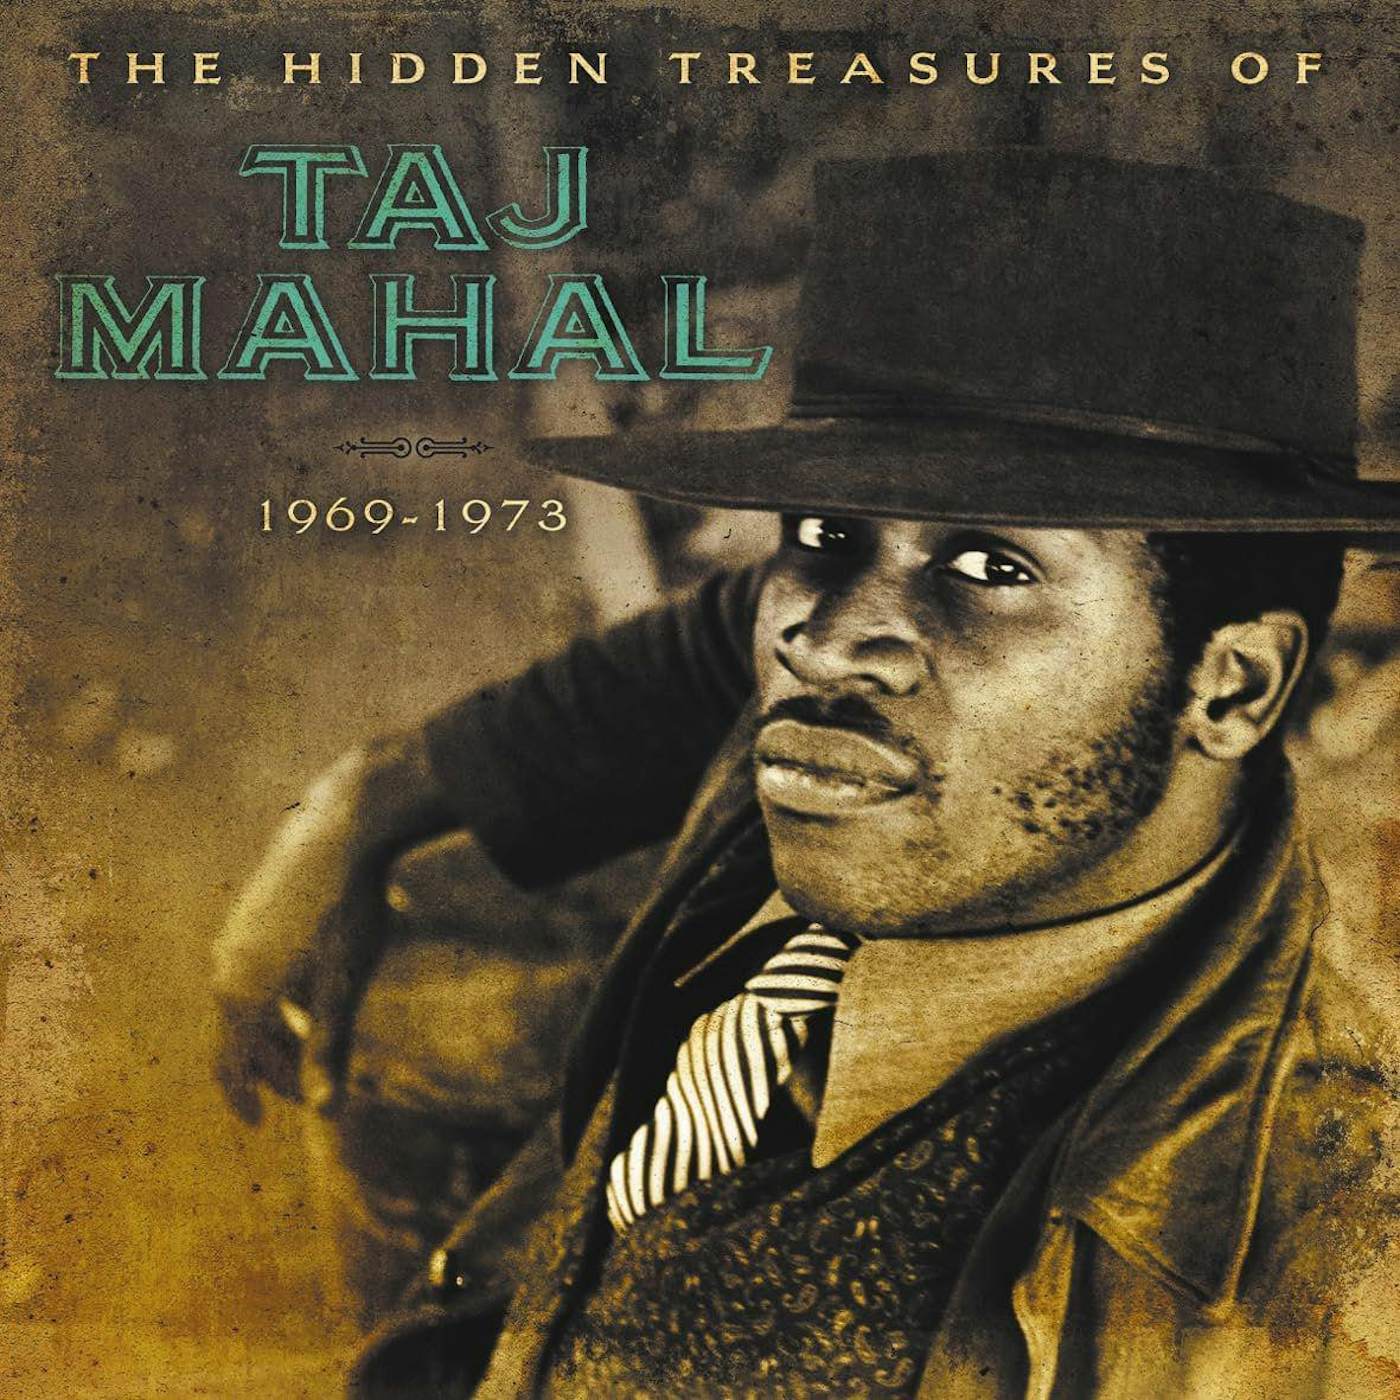 Hidden Treasures Of Taj Mahal: 1969-1973 (180g/2LP/Clear & Blue Marble) Vinyl Record